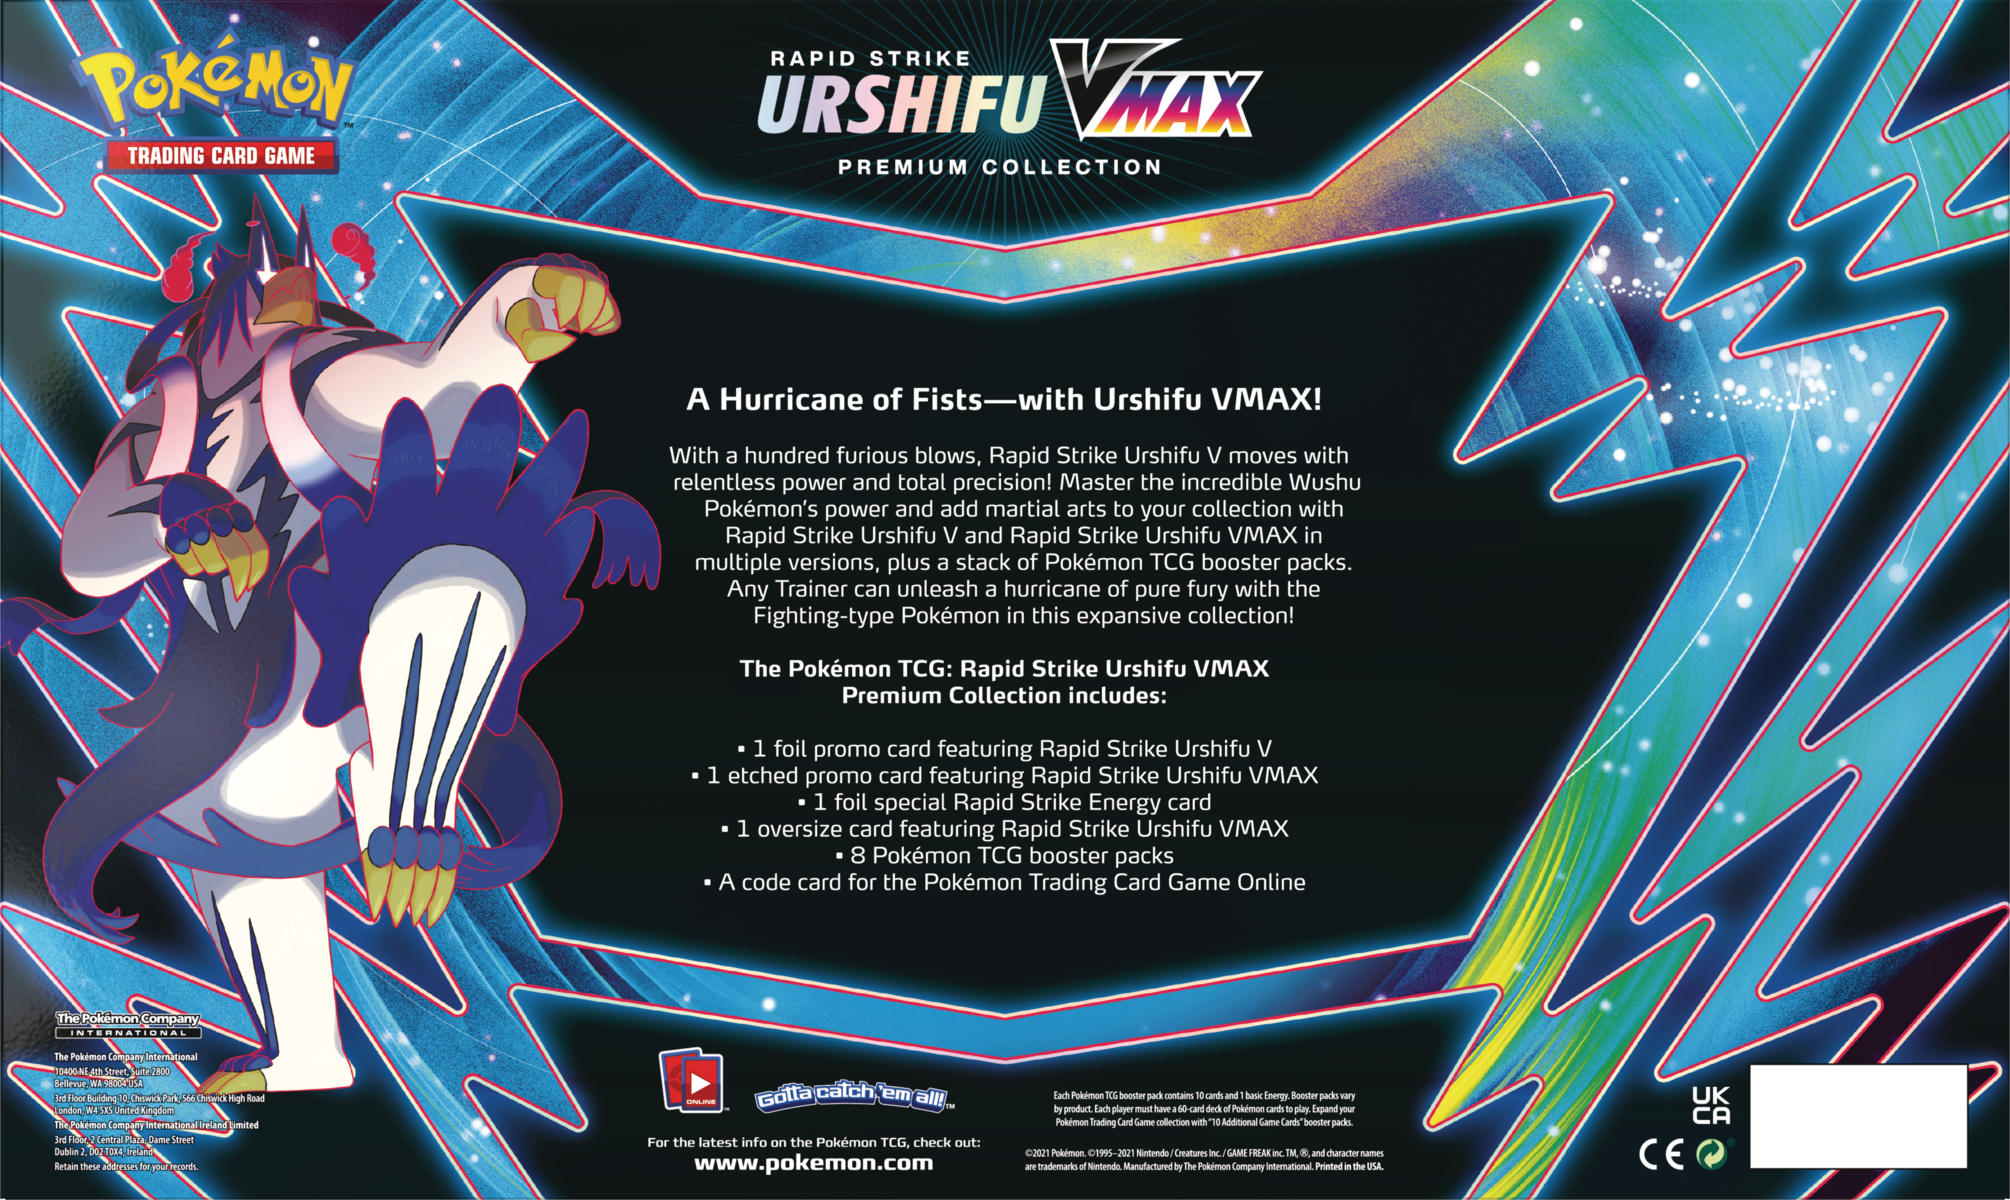 039 Single Rapid Strike Urshifu Vmax Premium Collections 039 Revealed Pokebeach Com Forums